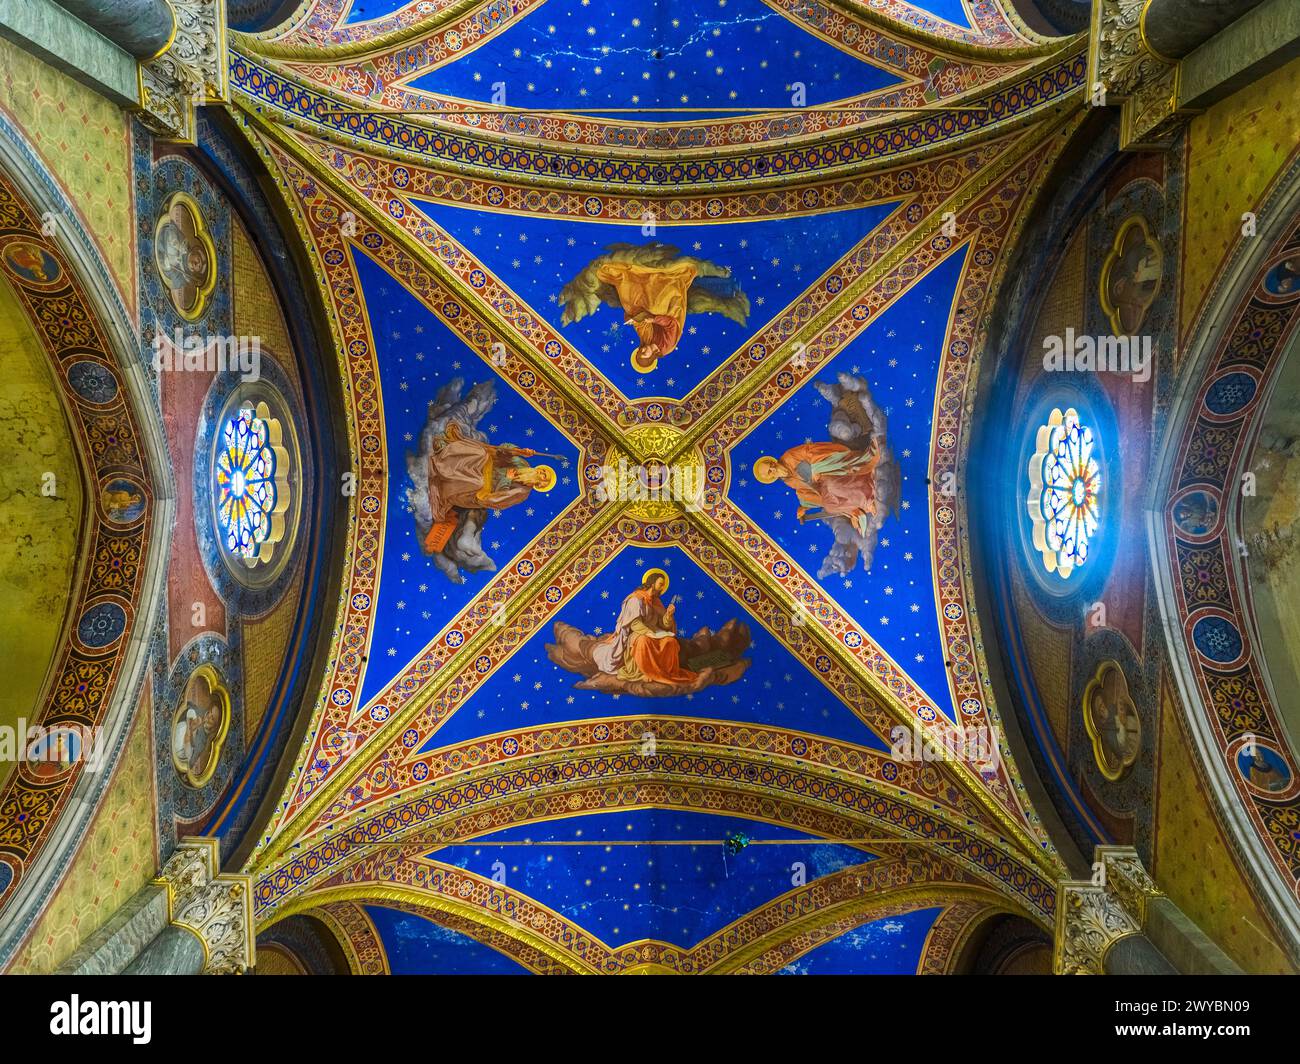 Plafond voûté décoré dans la Basilica di Santa Maria sopra Minerva - Rome, Italie Banque D'Images